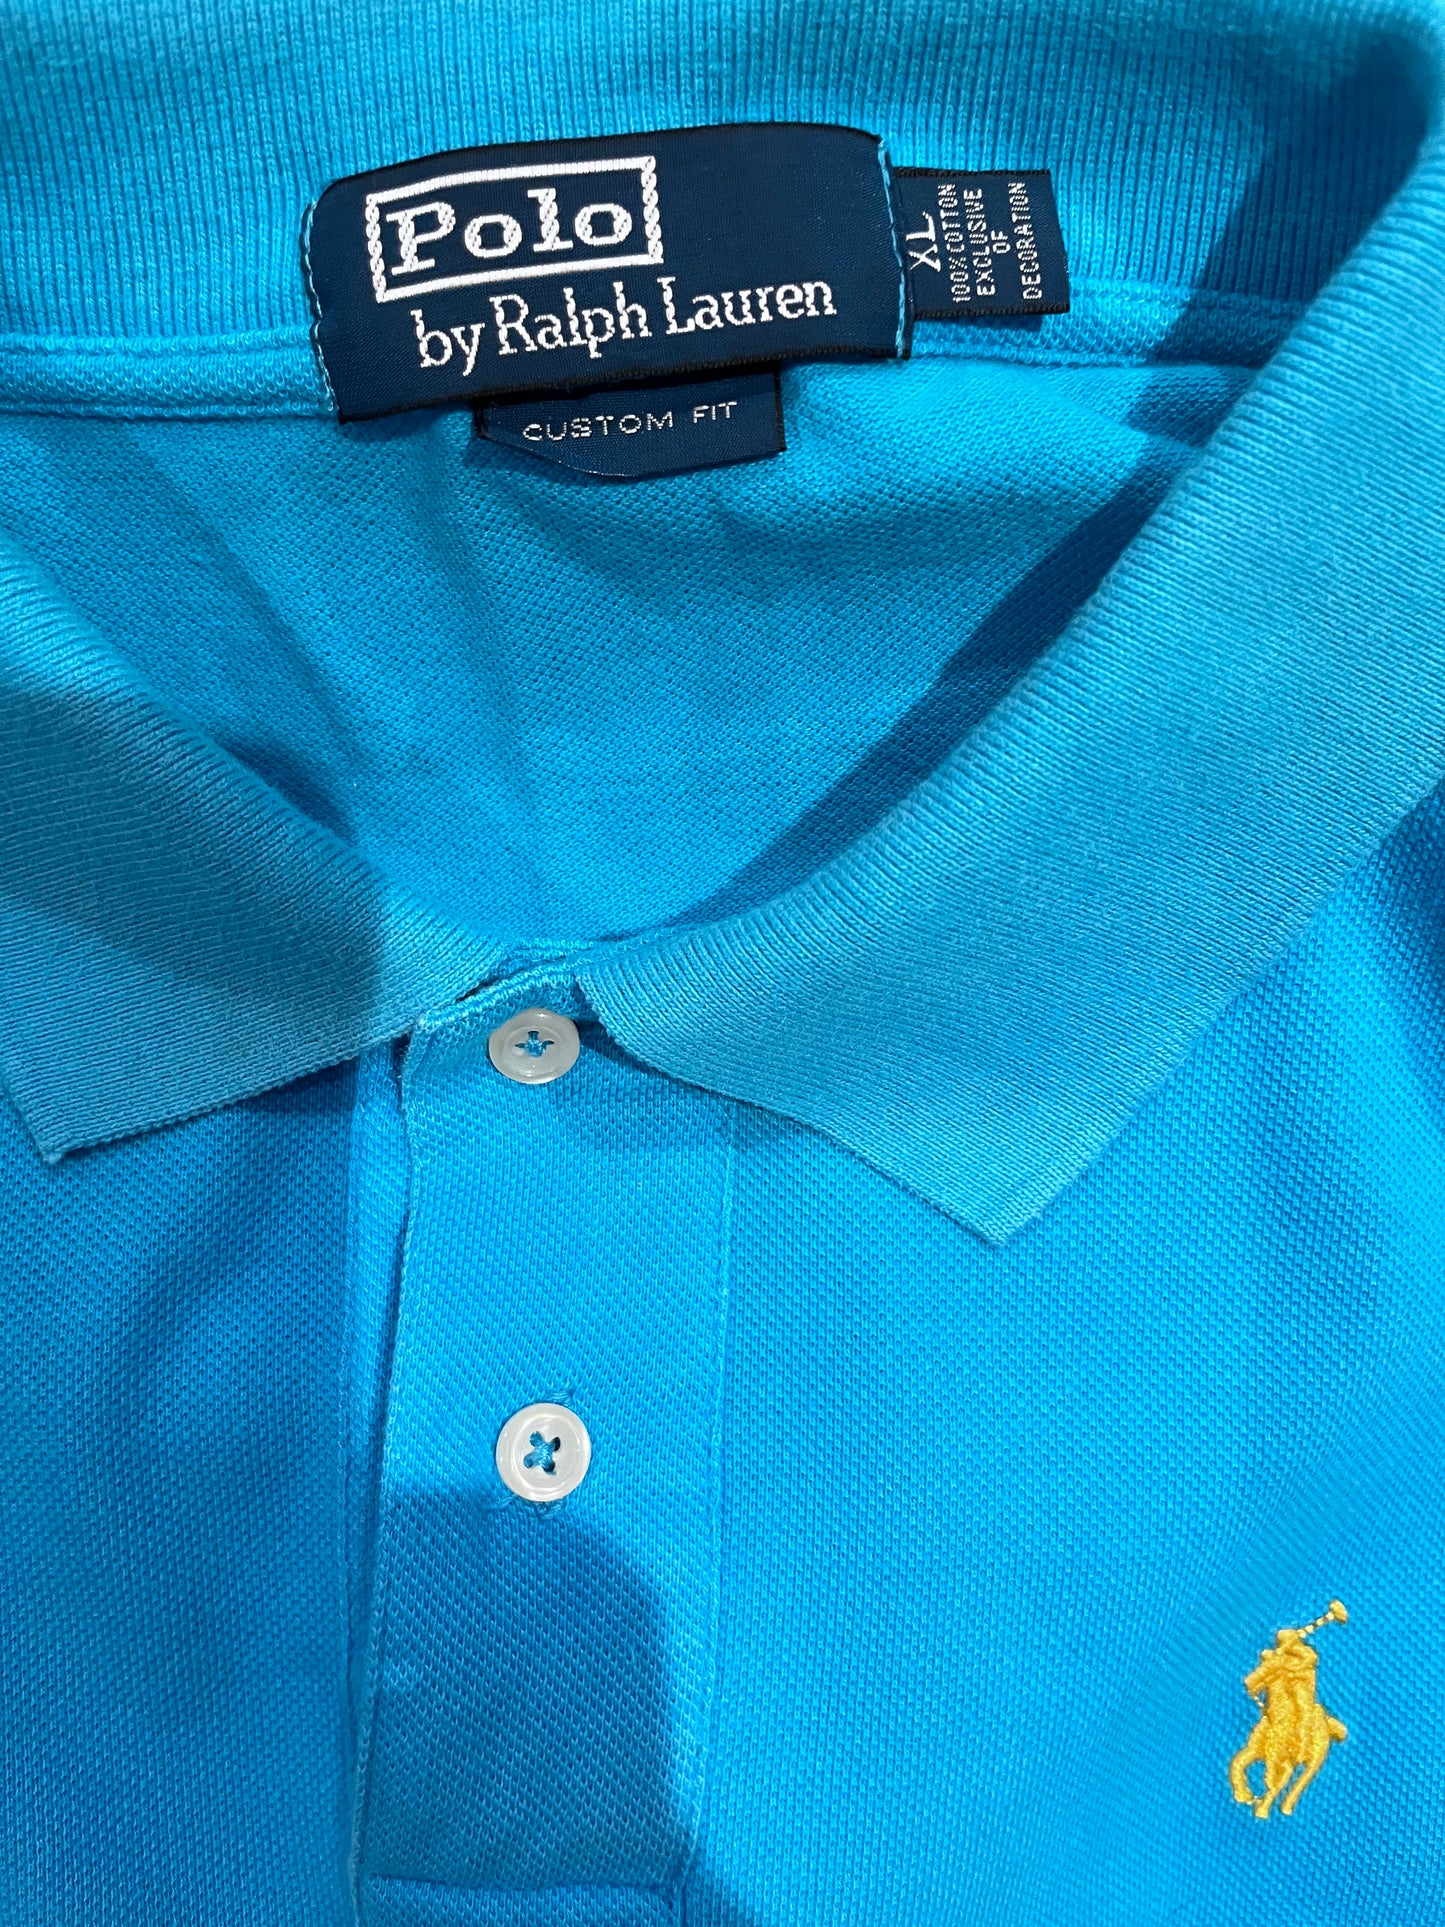 Polo Ralph Lauren 100% Cotton Blue Polo Shirt Size XL